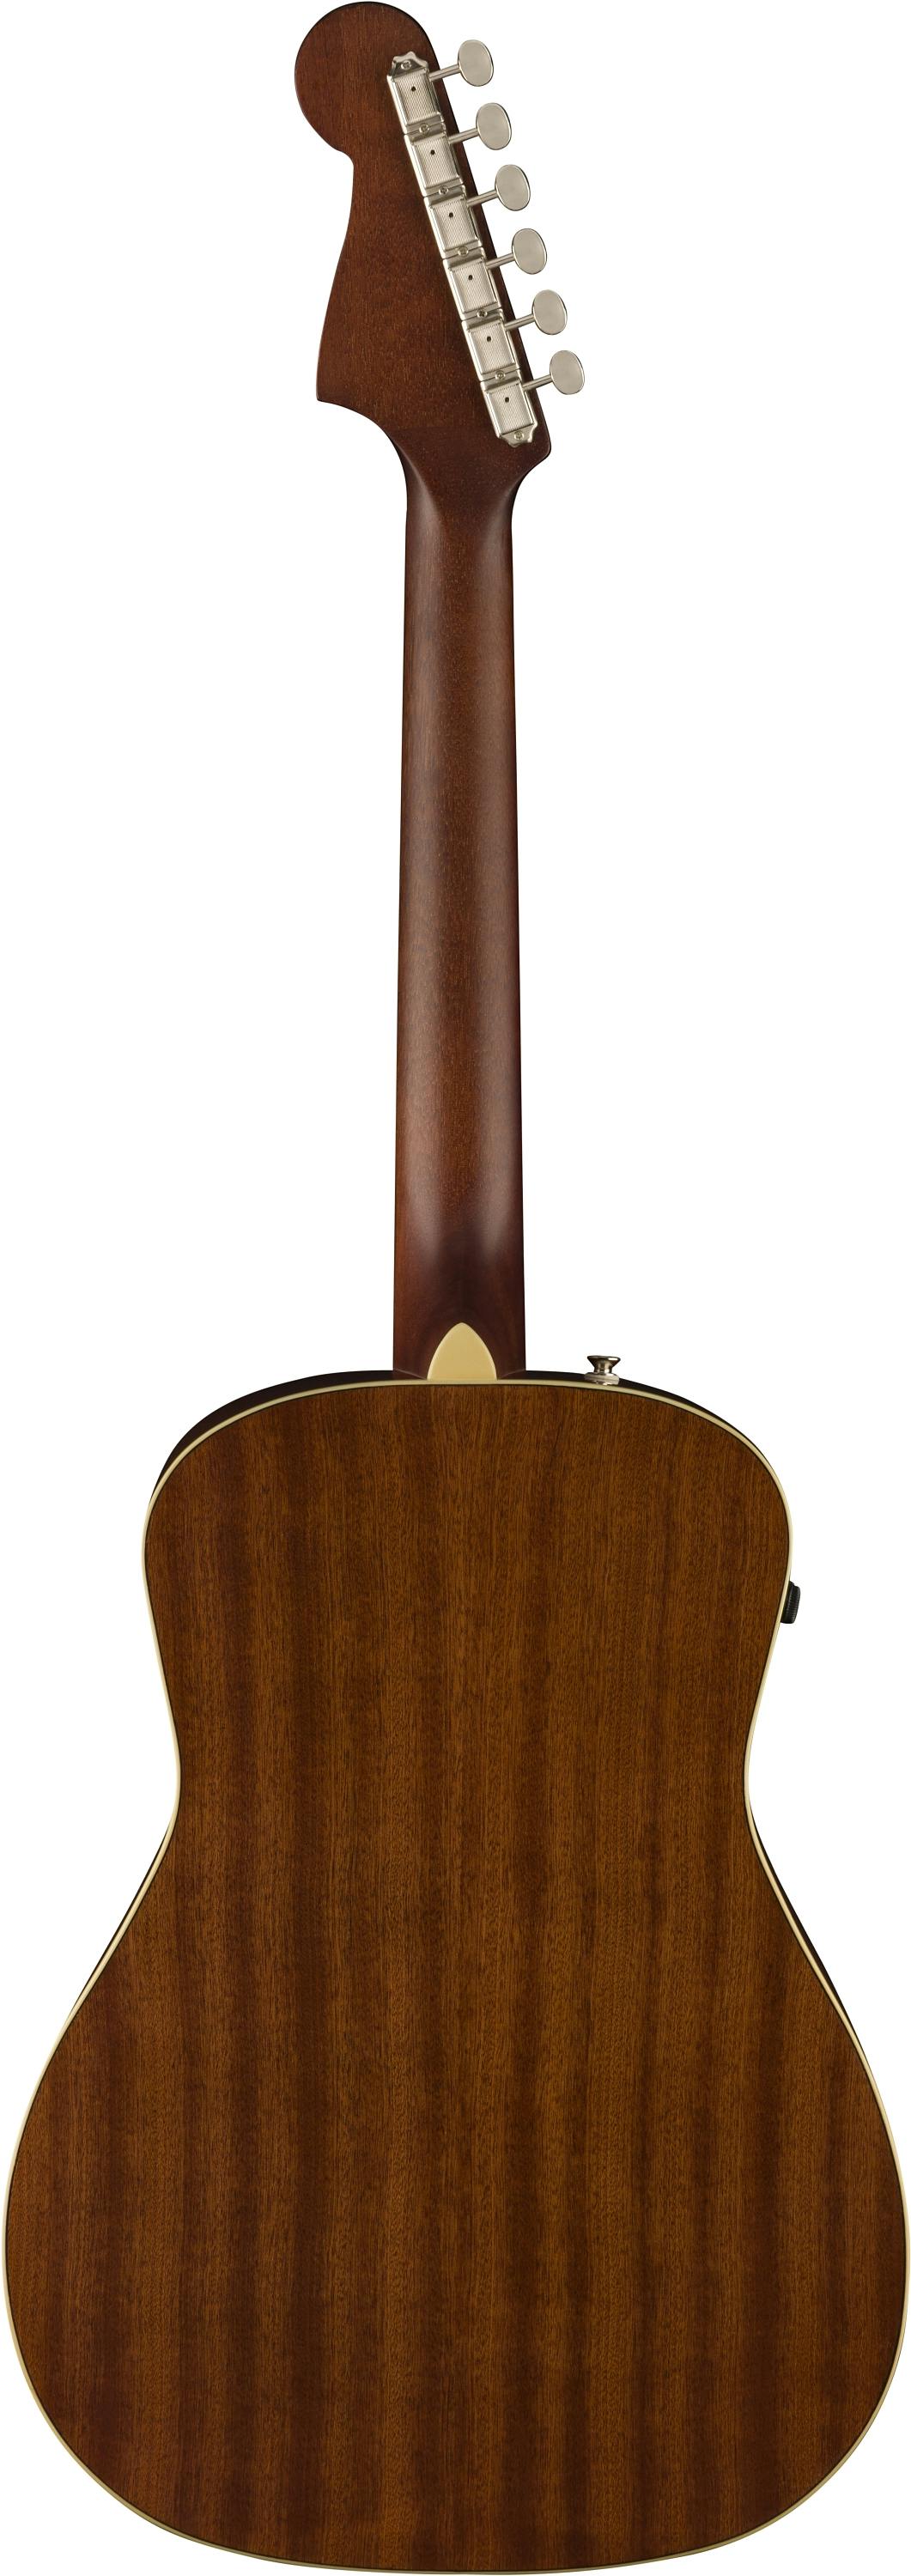 Fender Malibu Player Electro Acoustic Guitar in Sunburst 